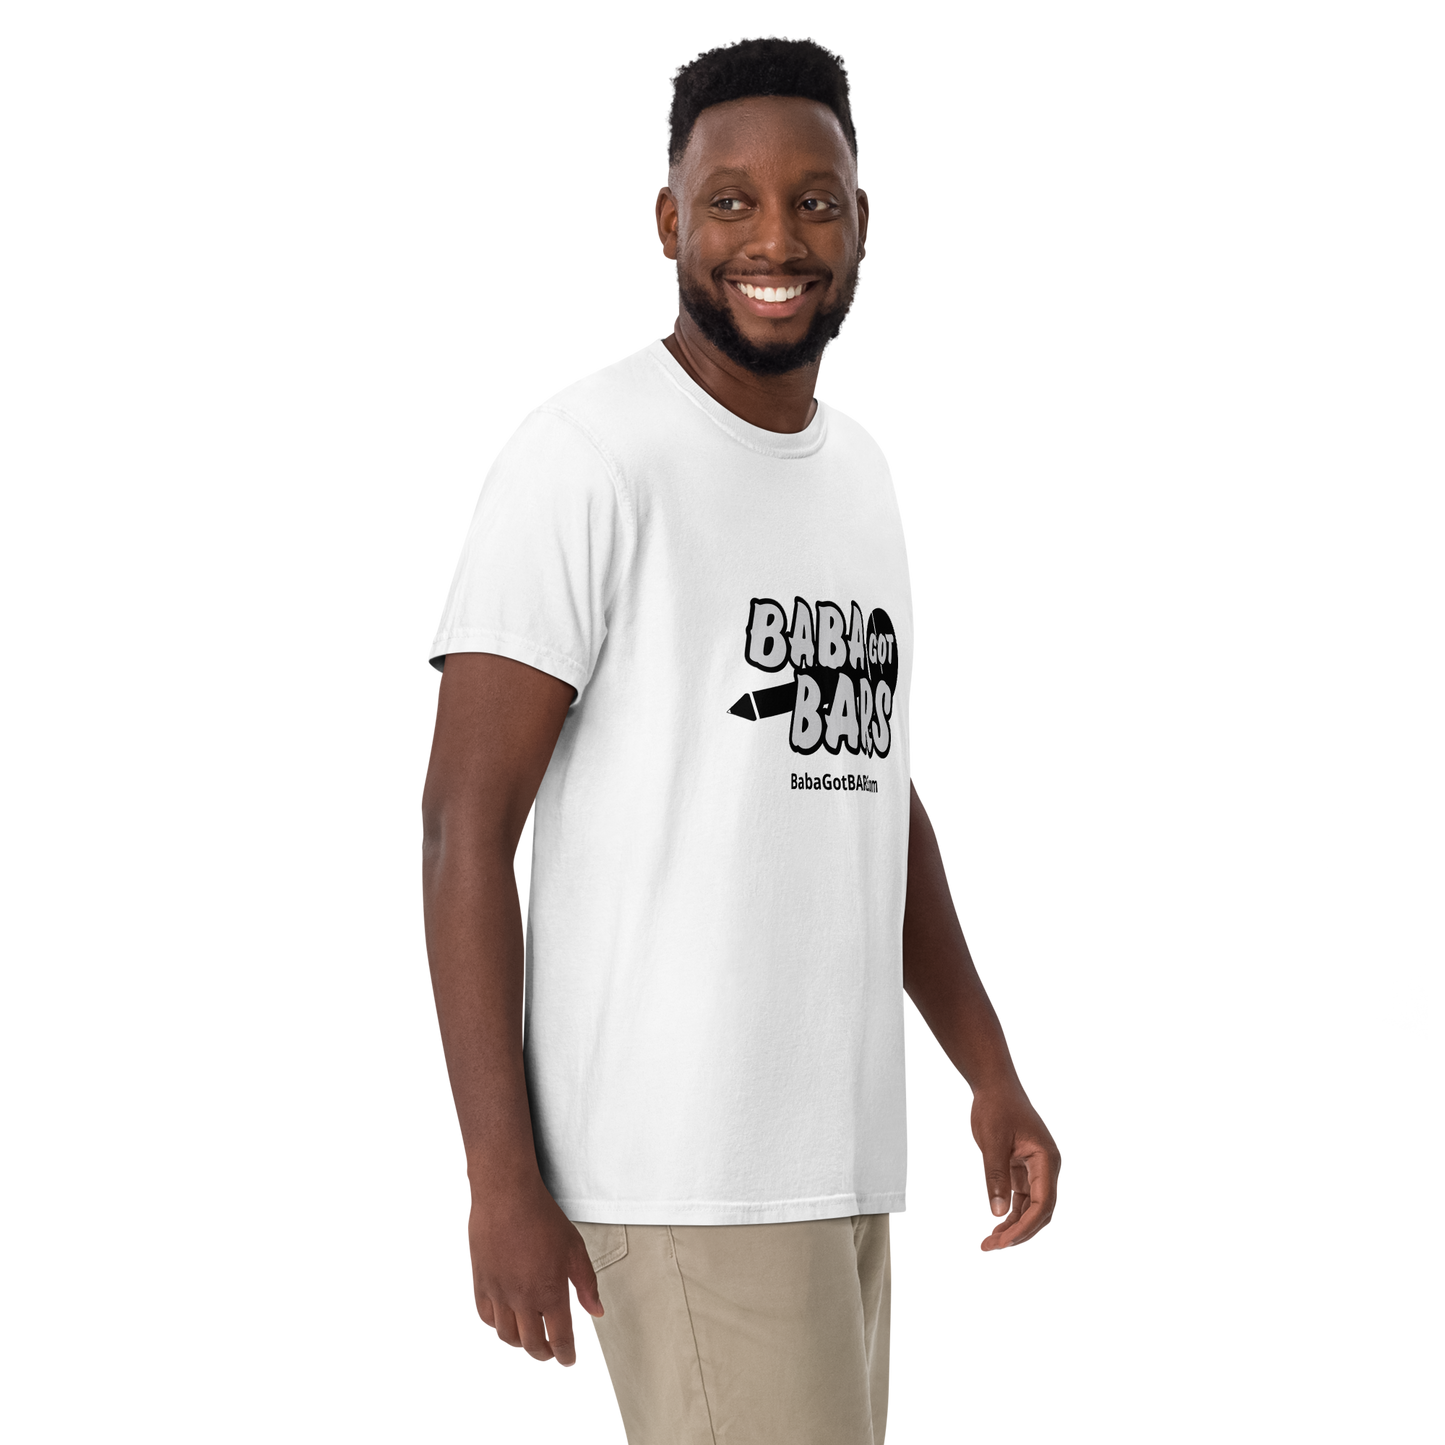 Baba Got BARS Unisex garment-dyed heavyweight t-shirt